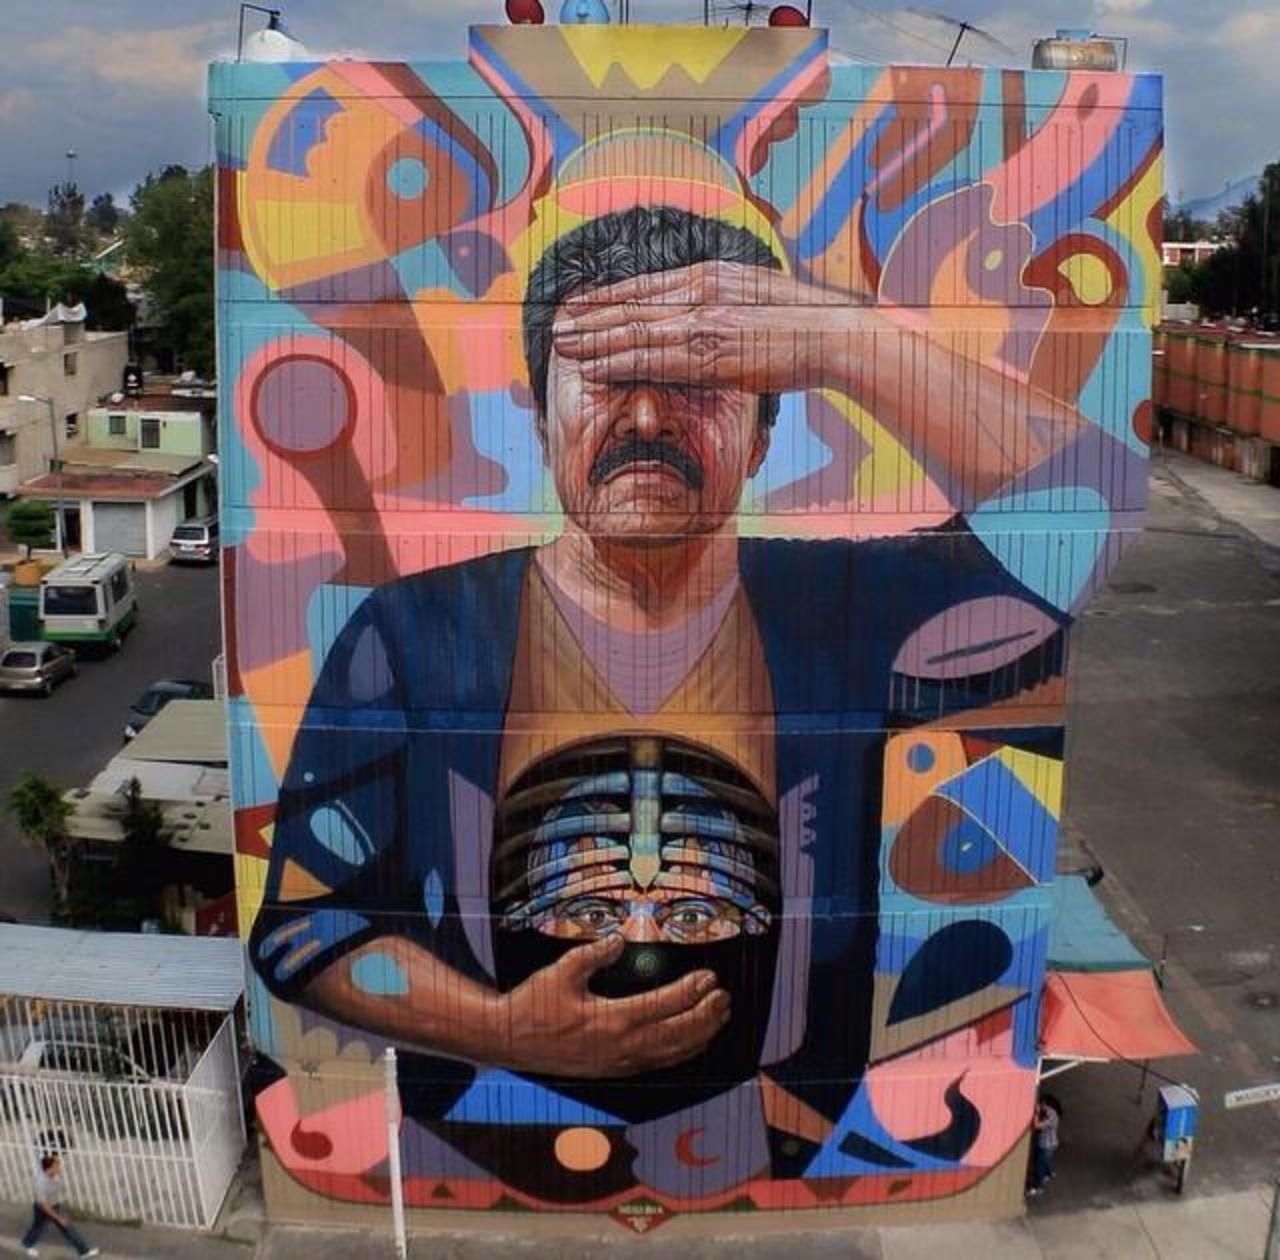 Sick! '@GoogleStreetArt: Large scale Street Art by the artist Daniel Cortez 

#art #mural #graffiti #streetart http://t.co/ZraODWOHxy"